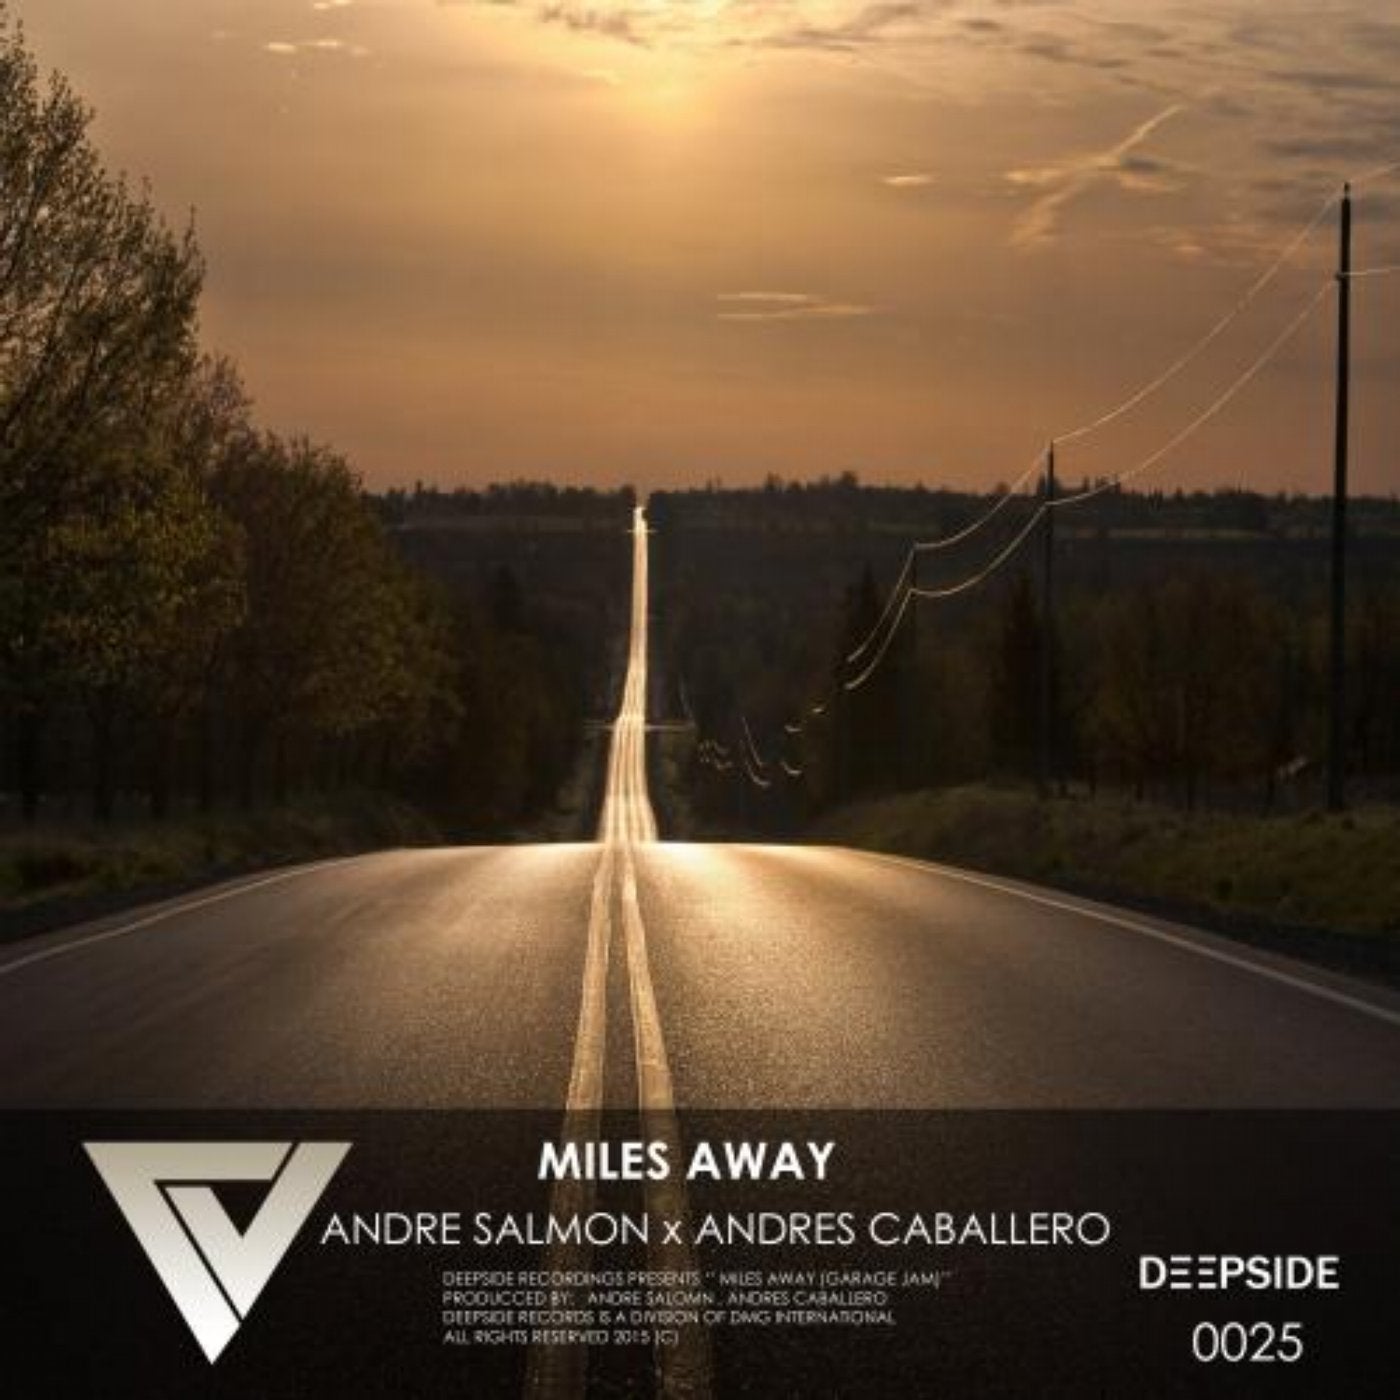 Miles Away (Garage Jam)